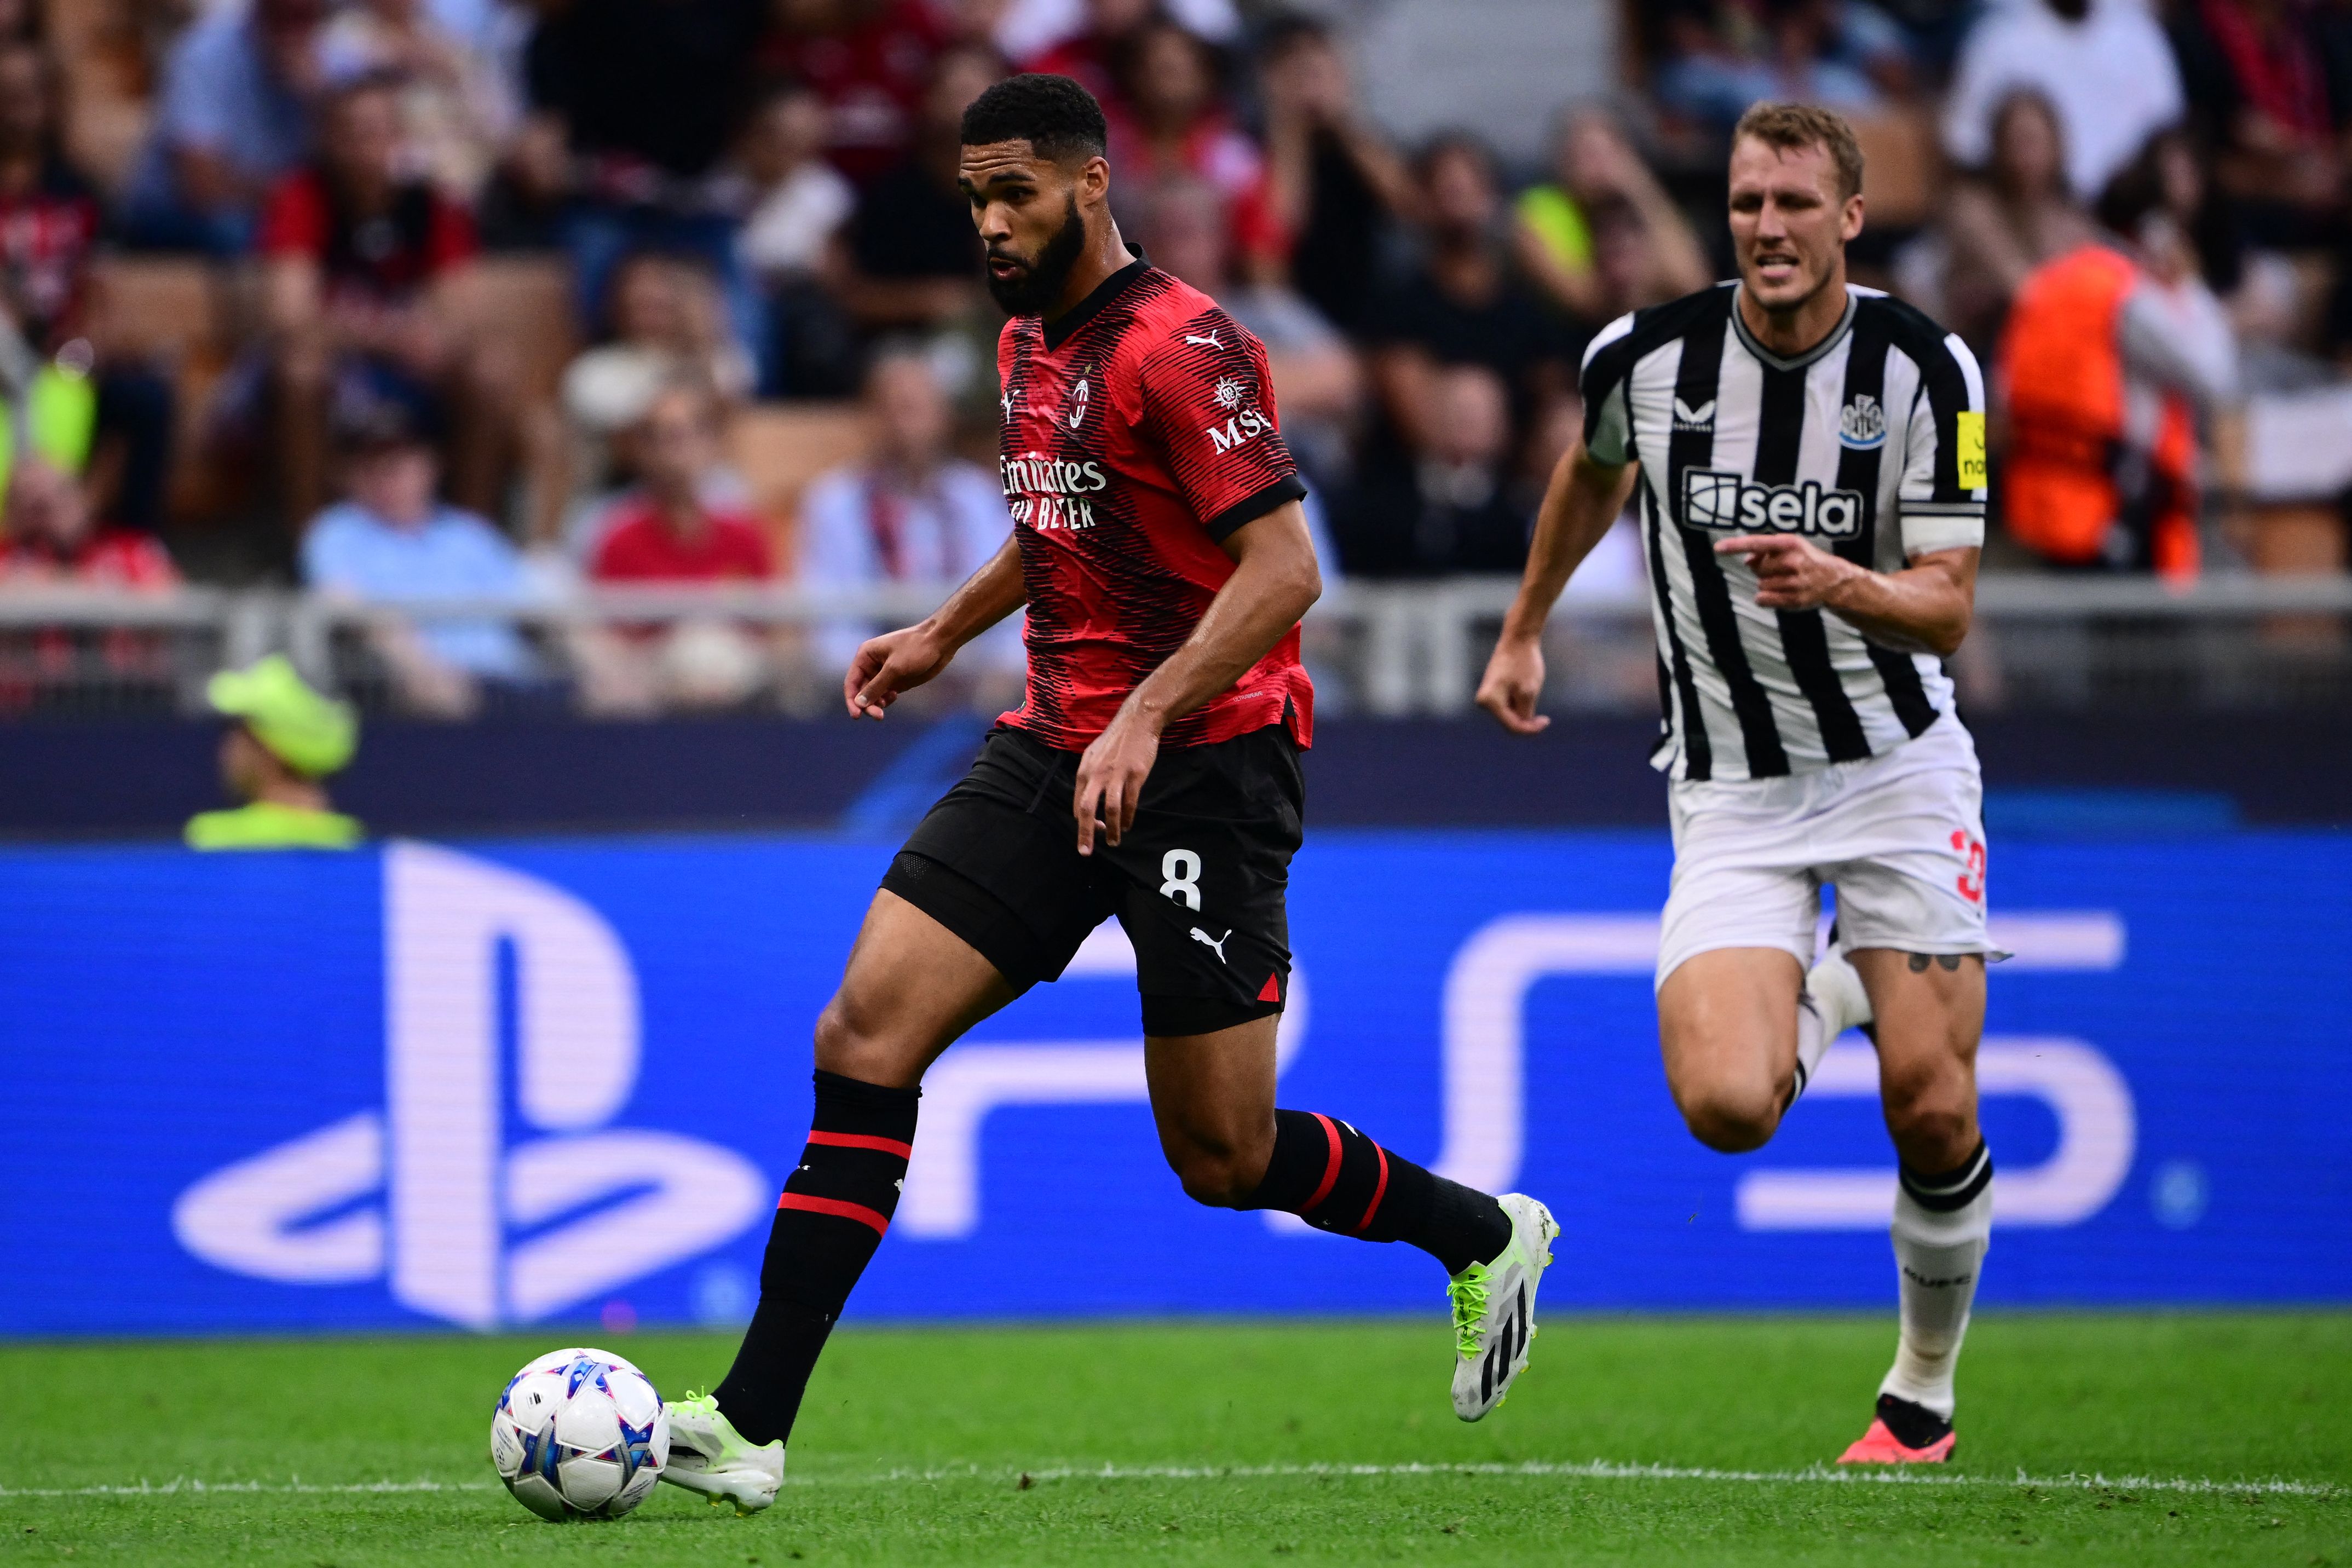 AC Milan vs Newcastle United, live online: score, stats & updates | UEFA Champions League 23/24